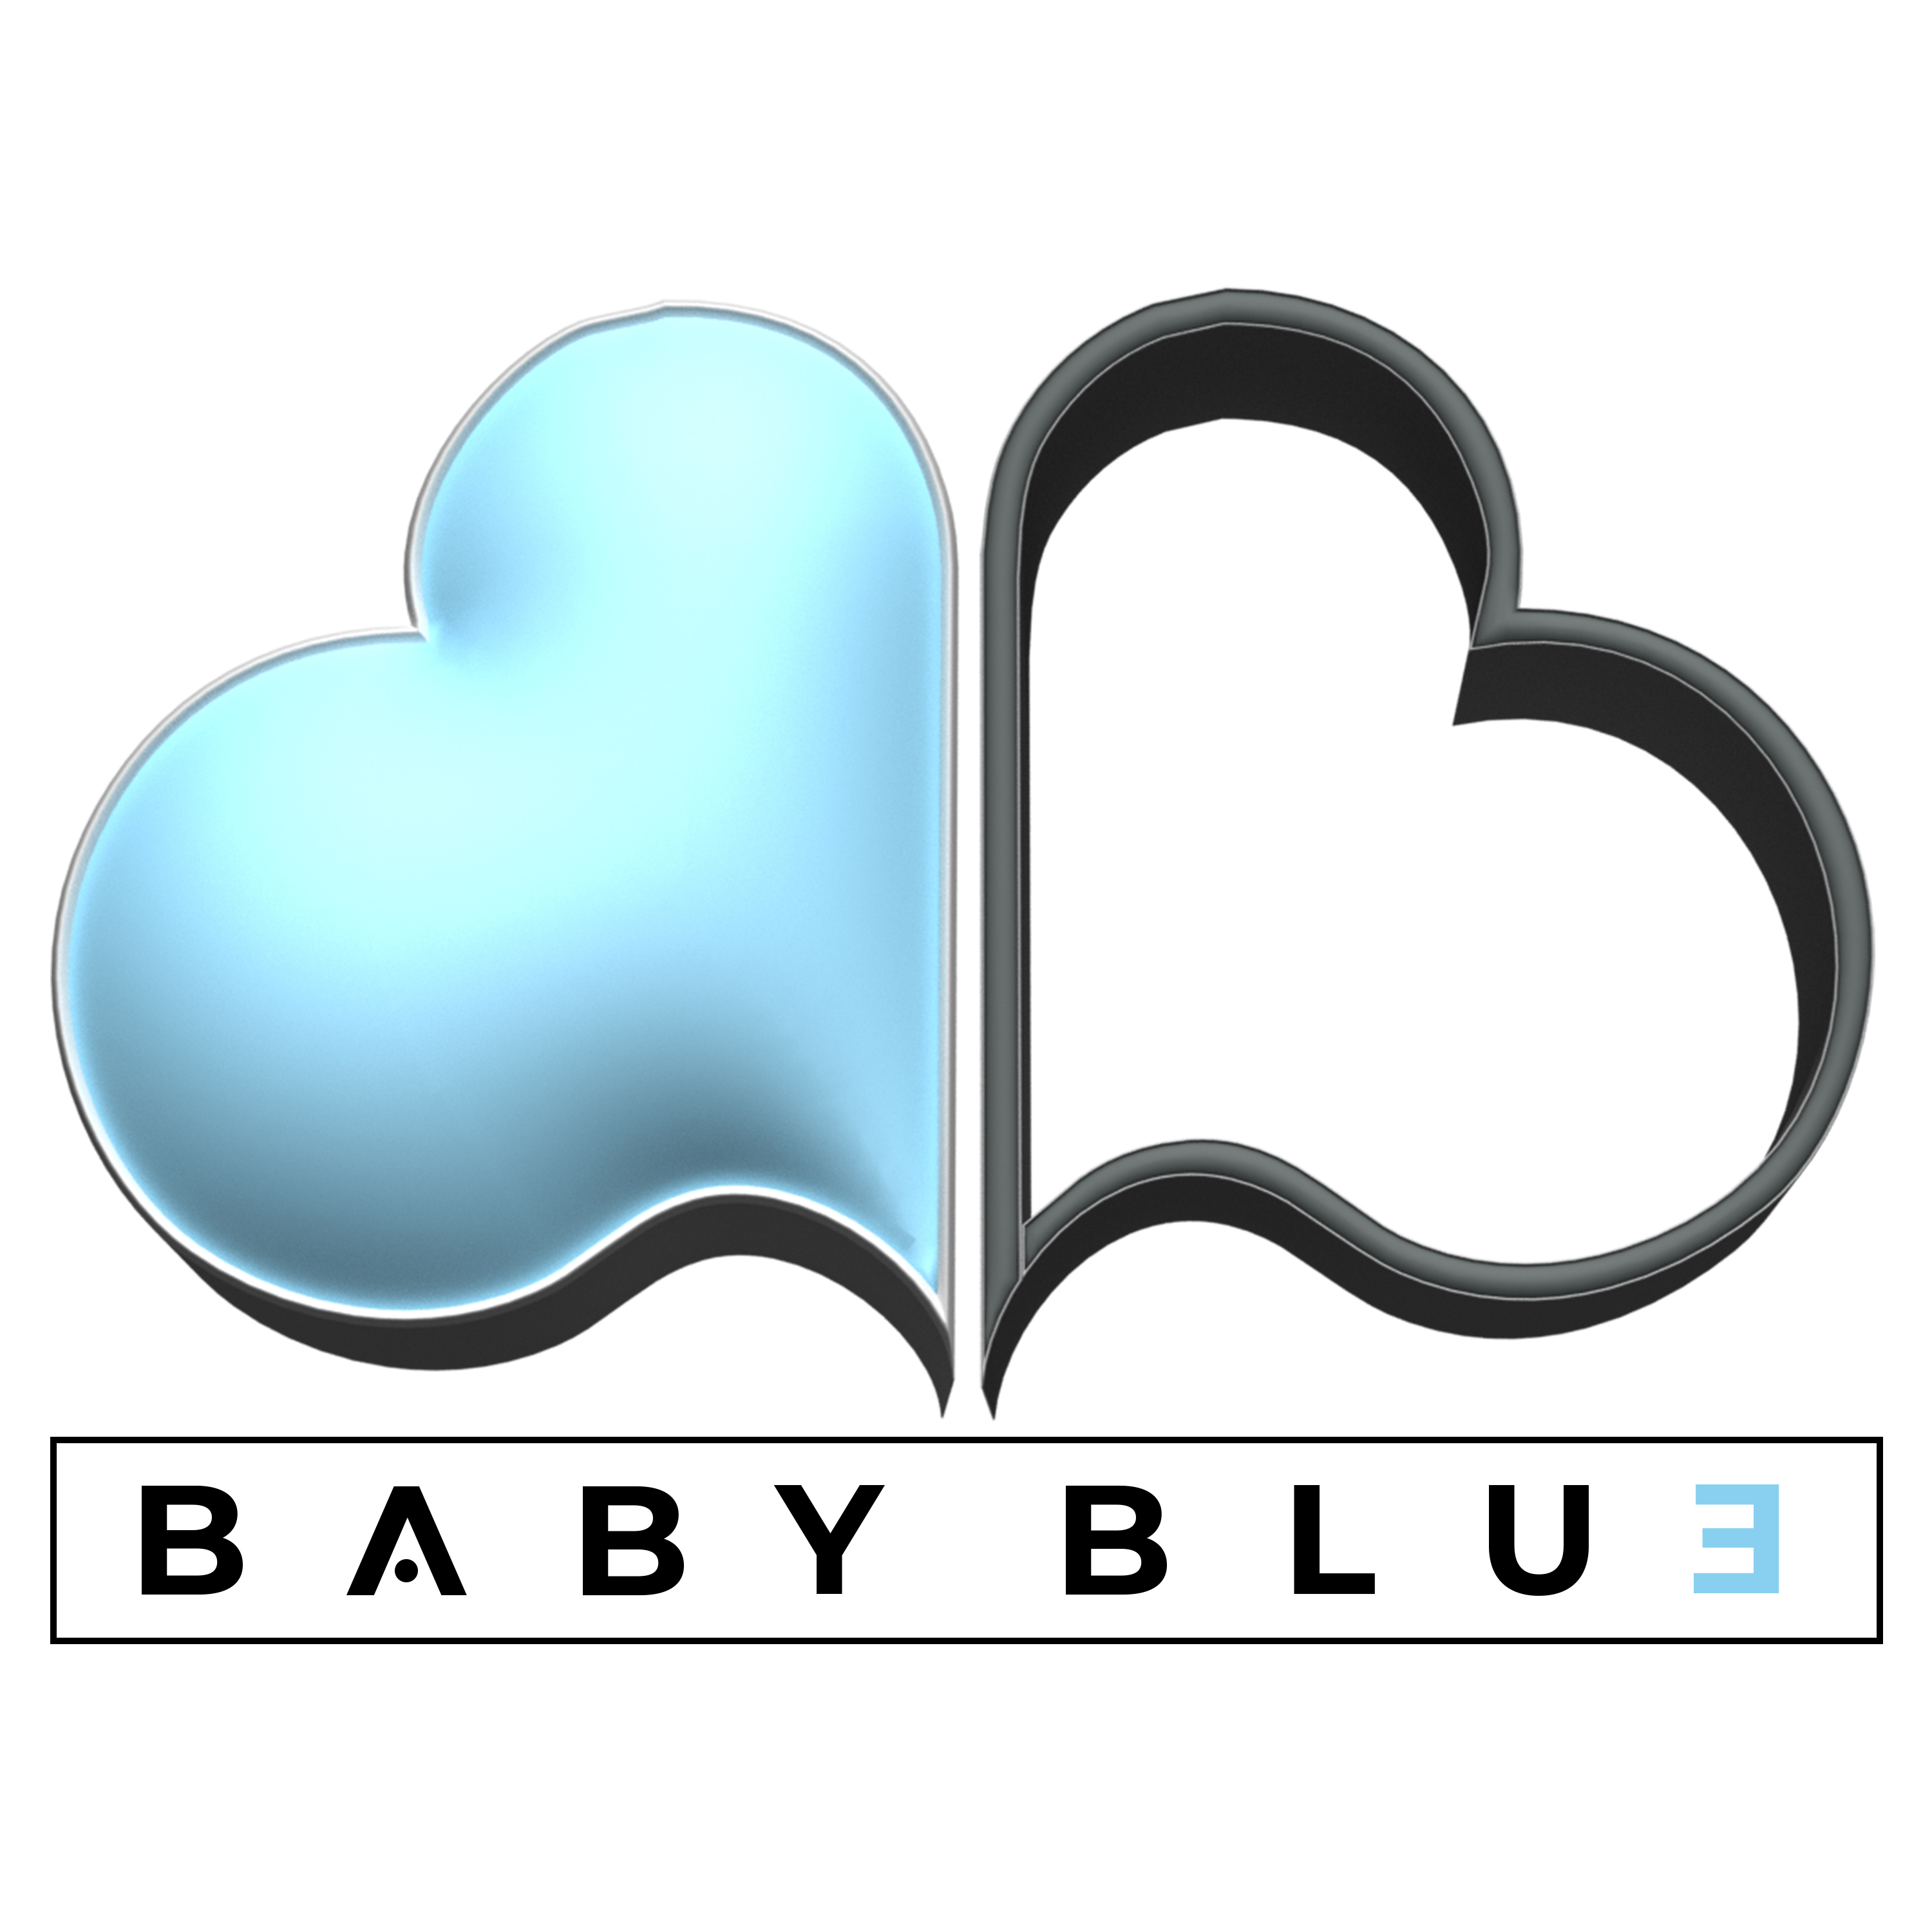 Baby blue - Wikipedia